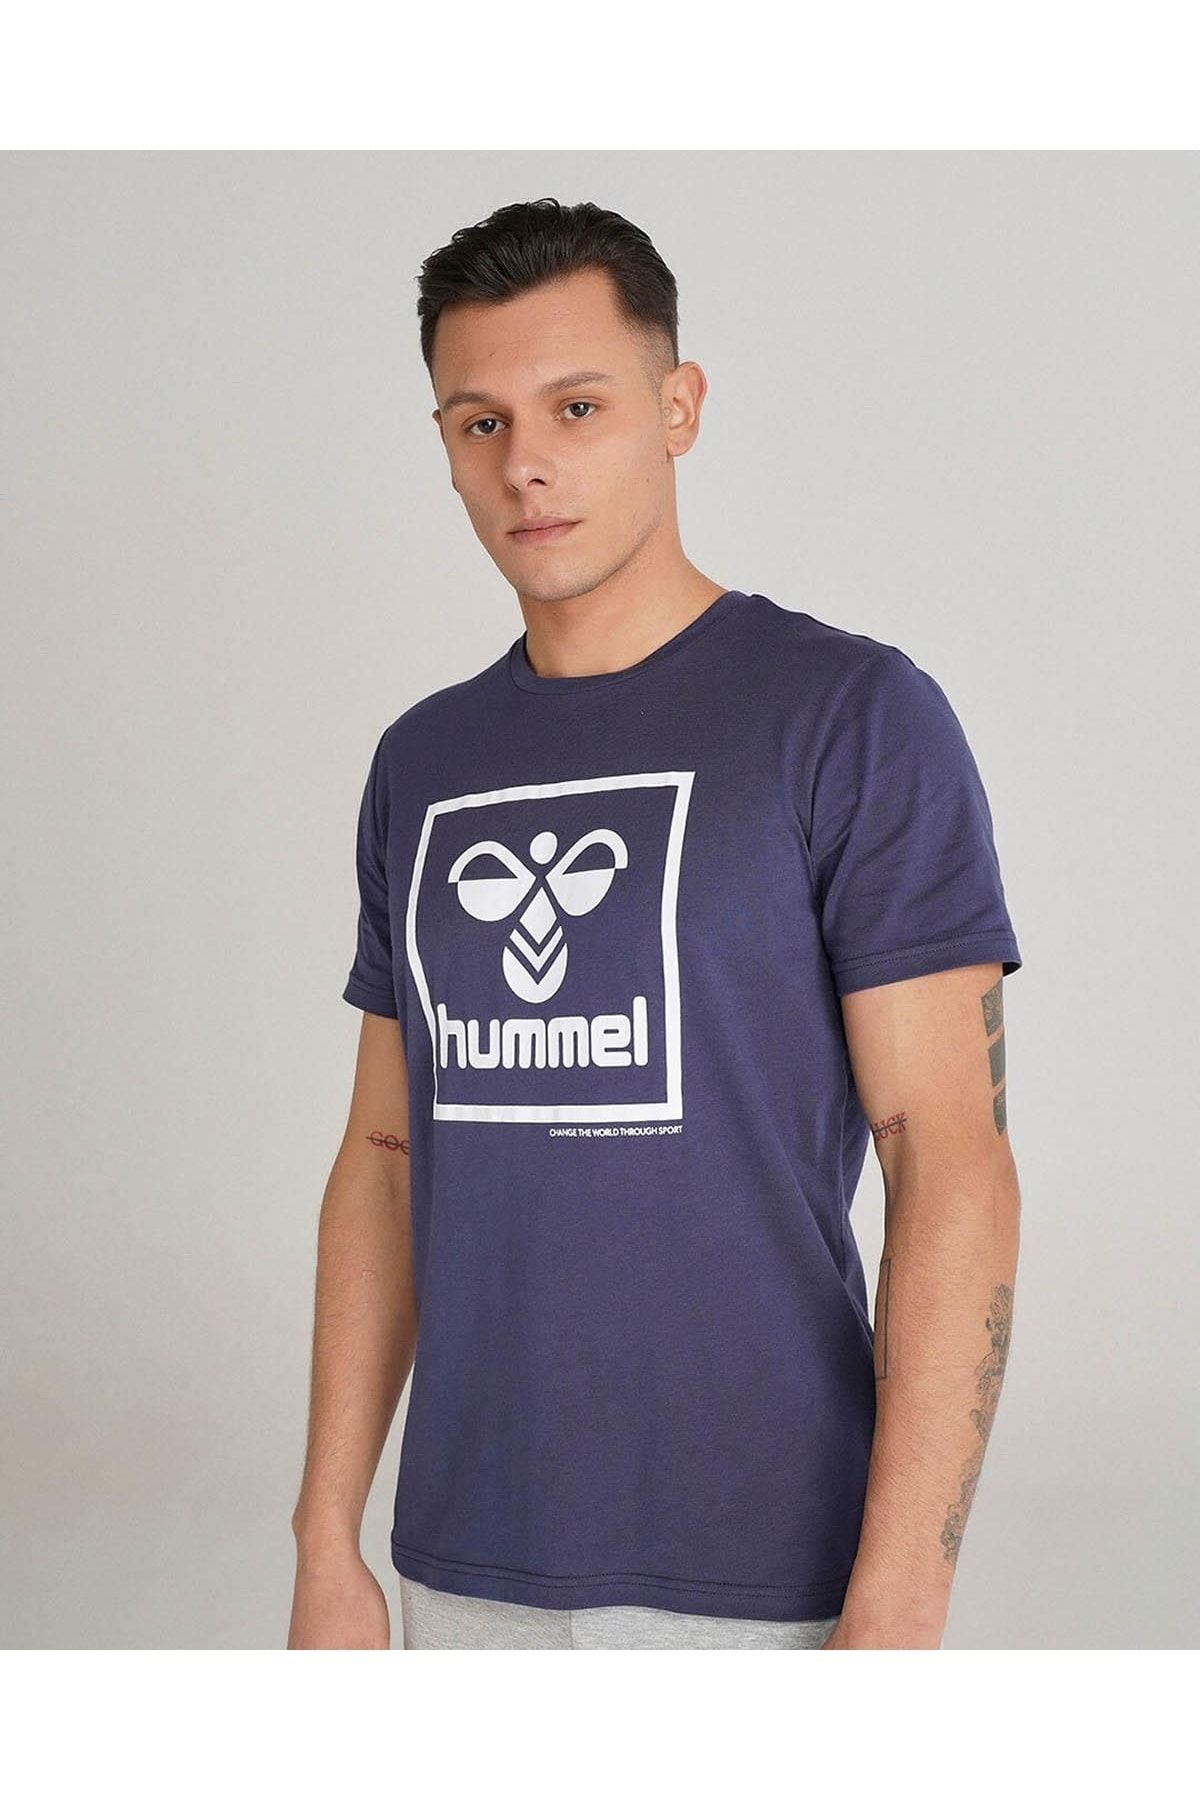 hummel Erkek T-shirt Mavi 911558-7666 Hmlt-ısam